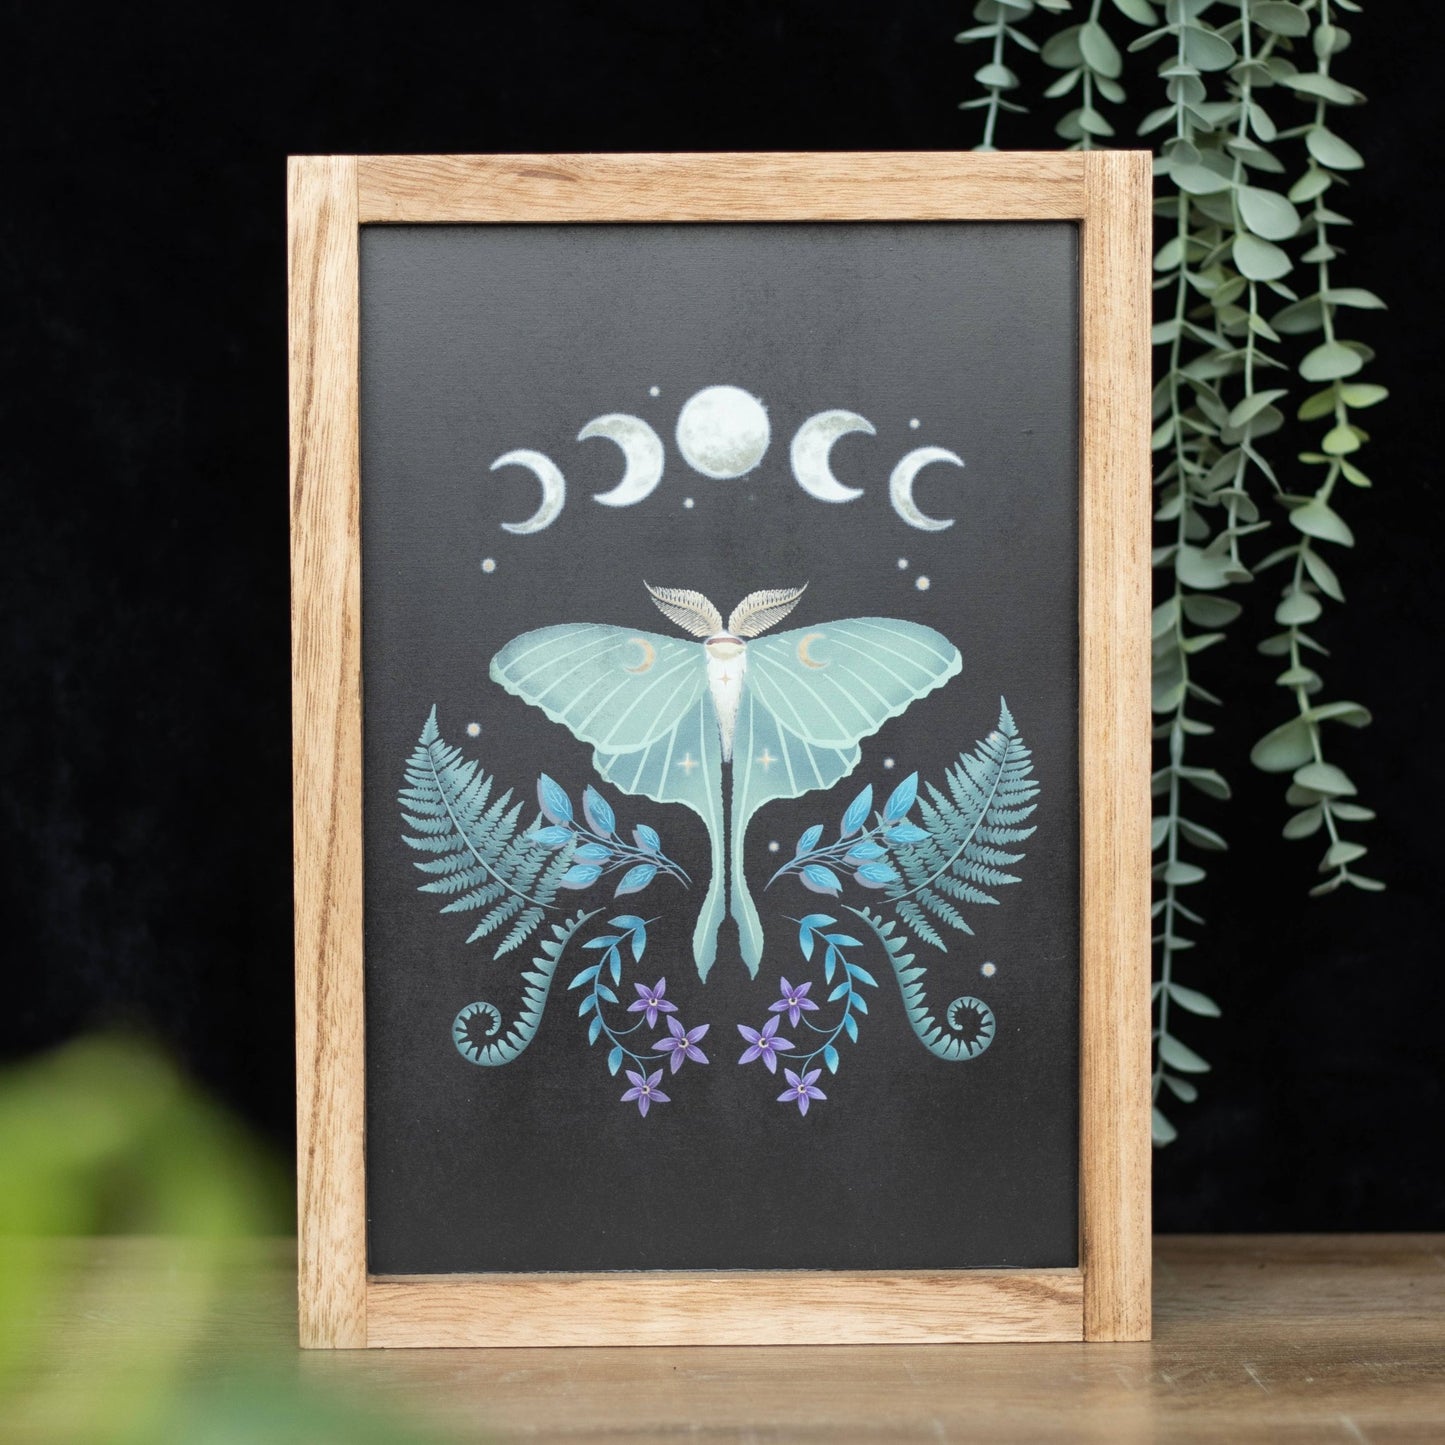 Something Different Wholesale - Luna Moth Wooden Framed Wall Art - The Oddity Den